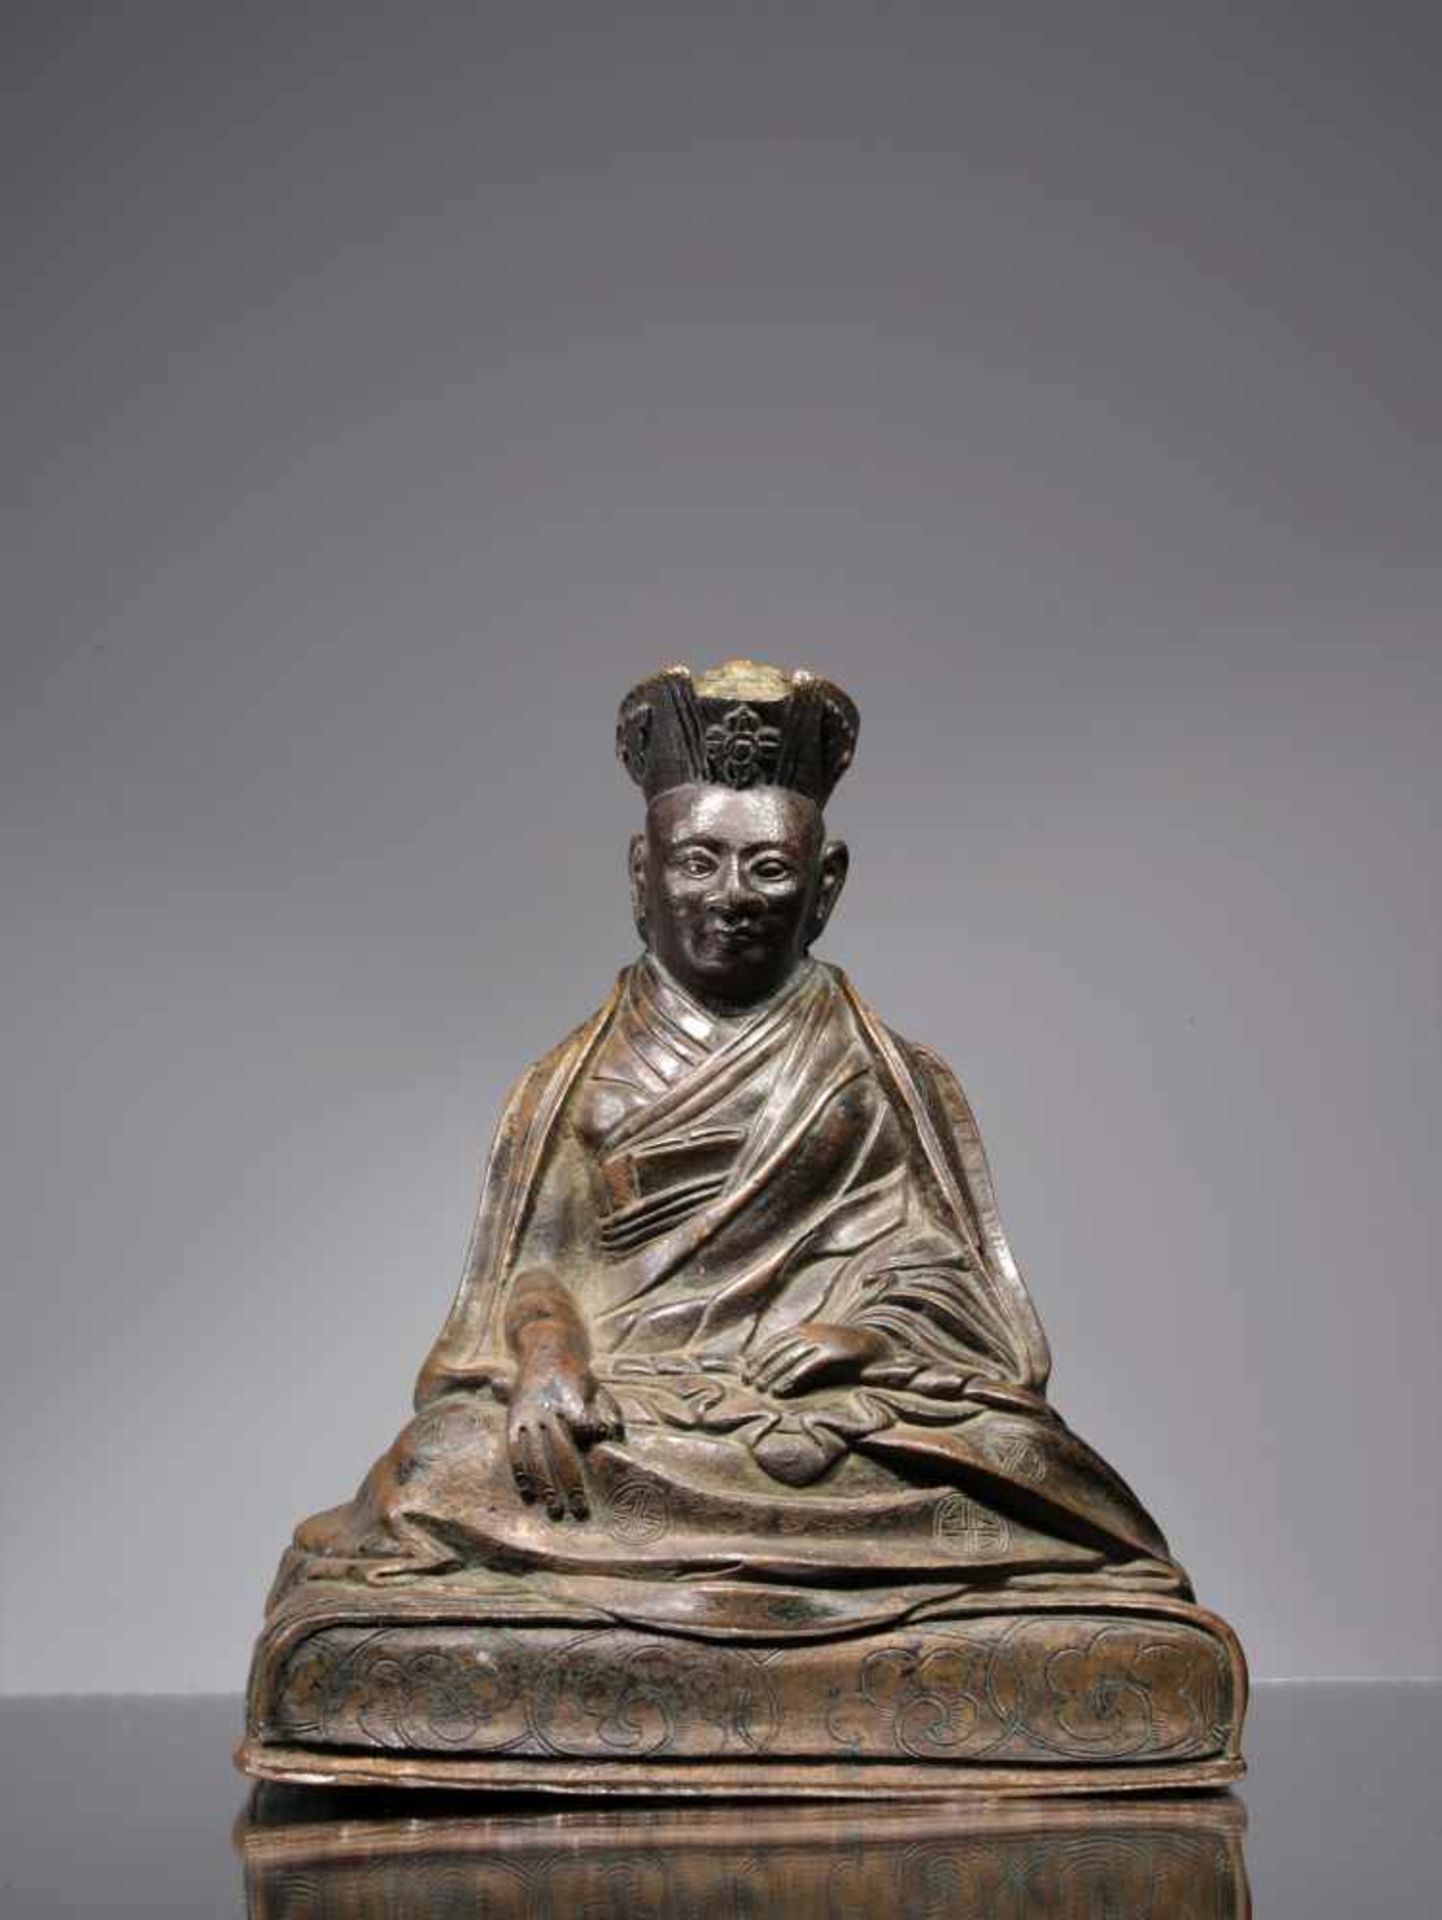 LAMABronze,Tibet, 18th century,Dimensions: Height 17,5 cmWeight: 2250 gramsA lama sitting on a